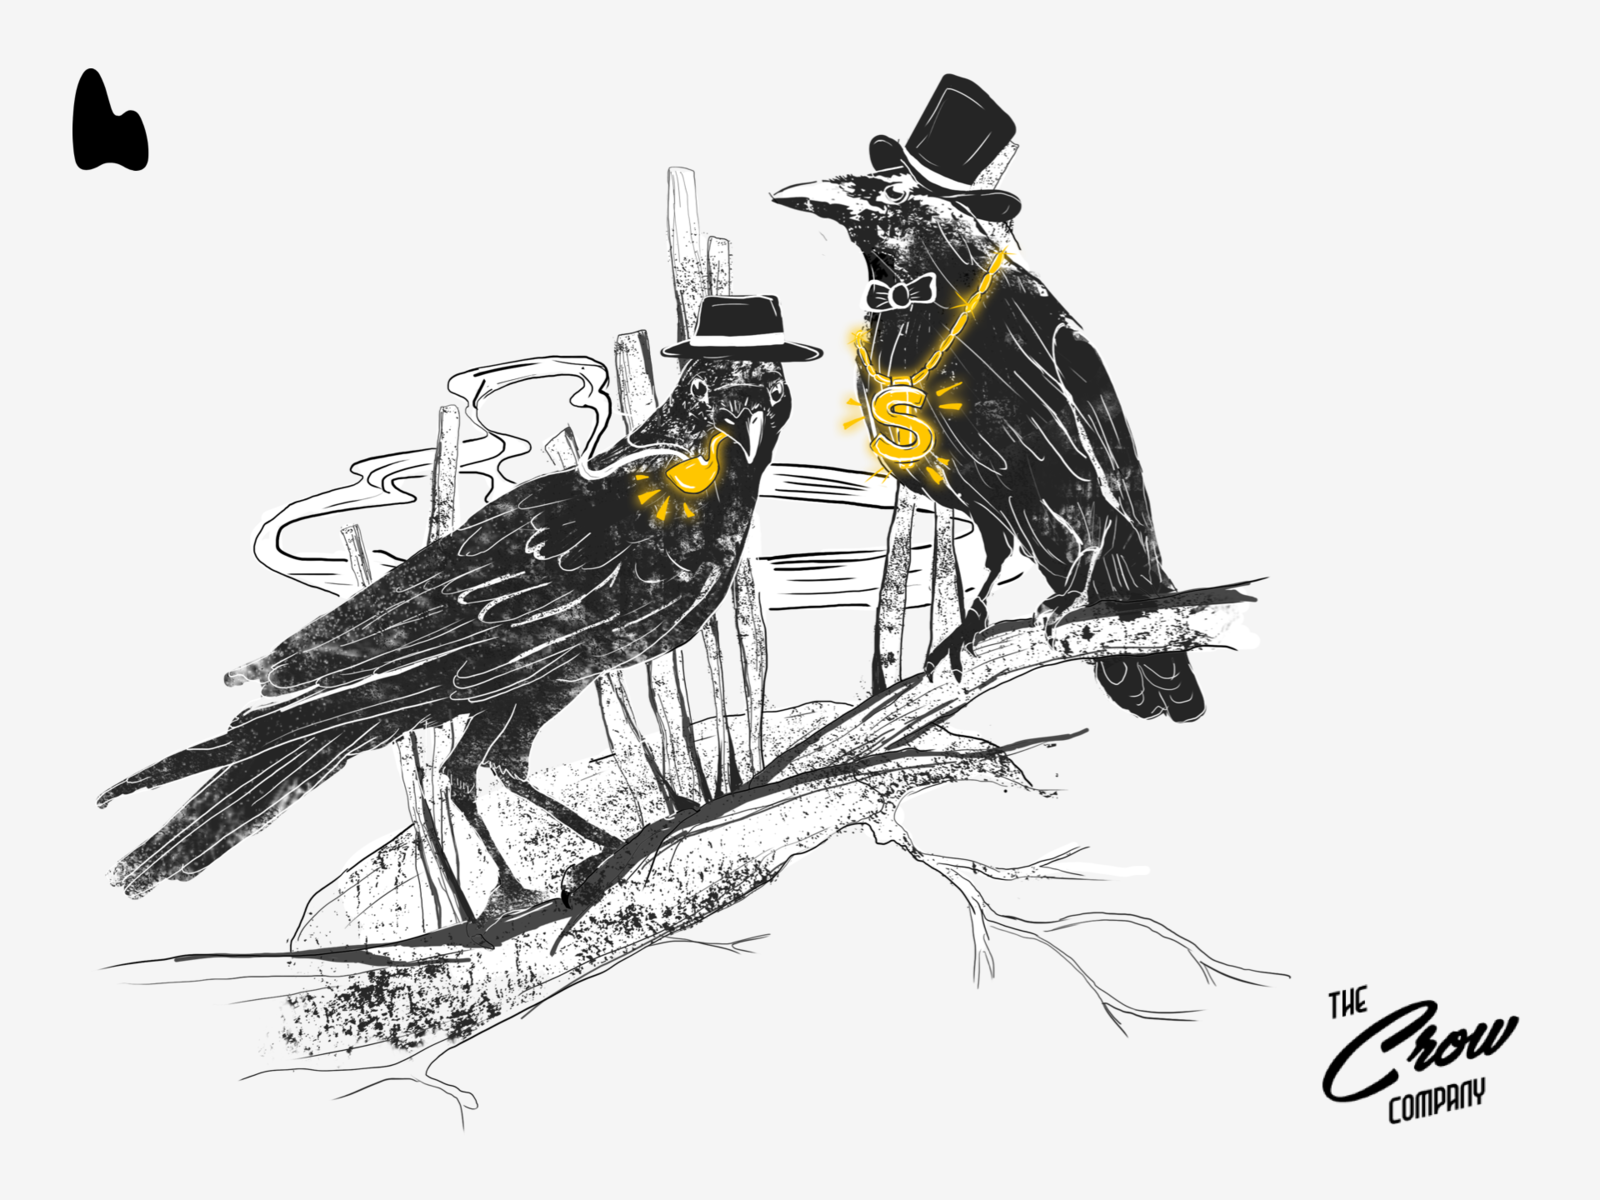 The Crow Club - Illustration by Salt Design Studio on Dribbble